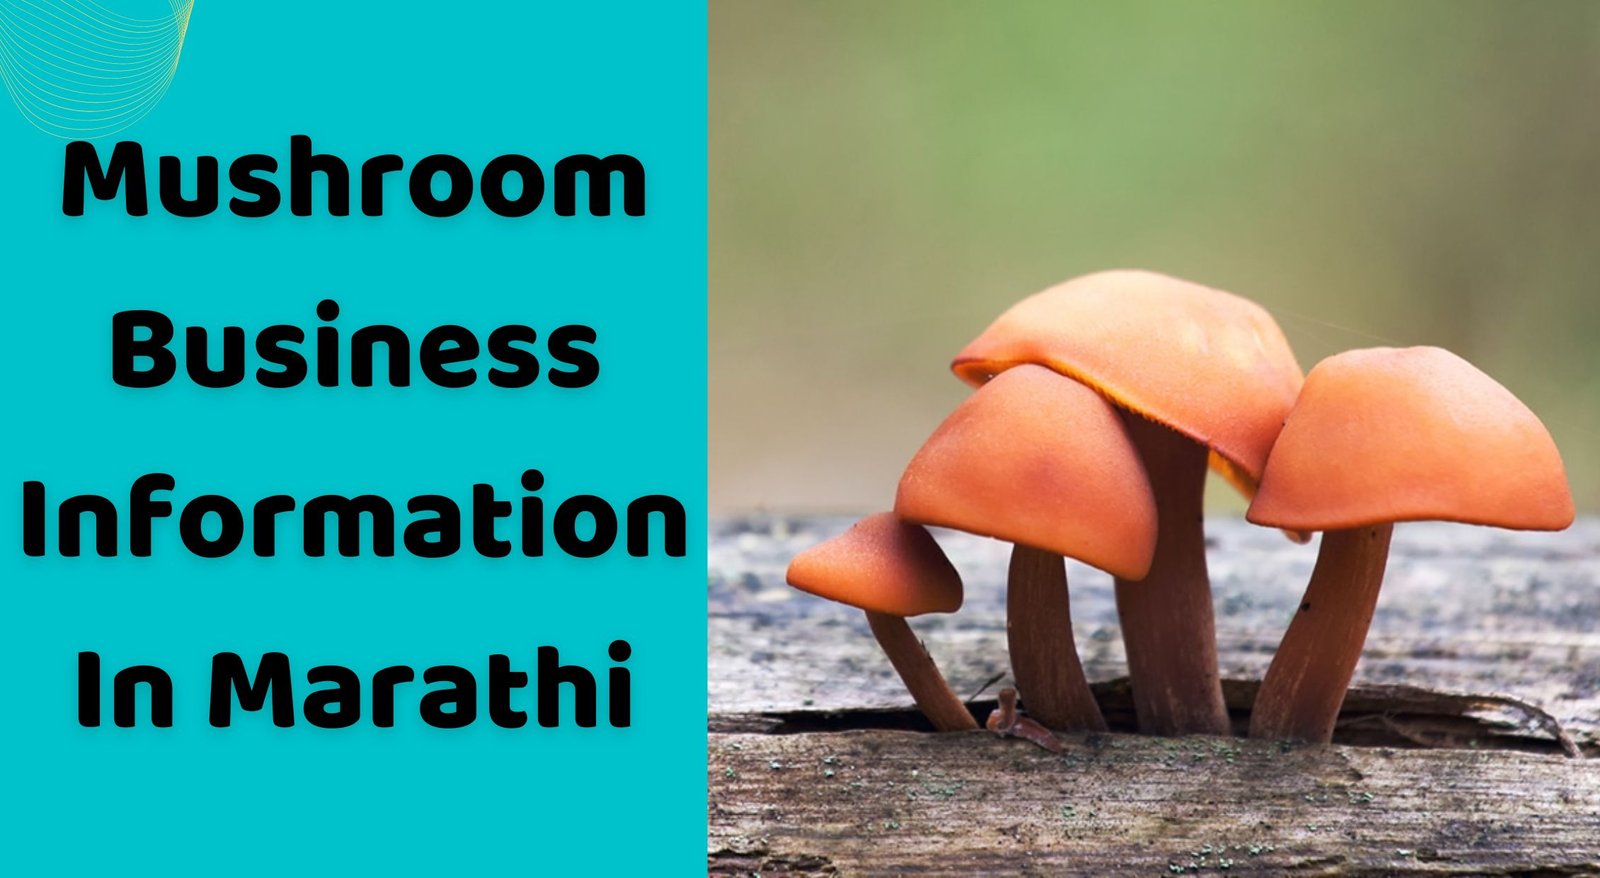 मशरूम उत्पादन व्यवसाय | Mushroom Business Information In Marathi